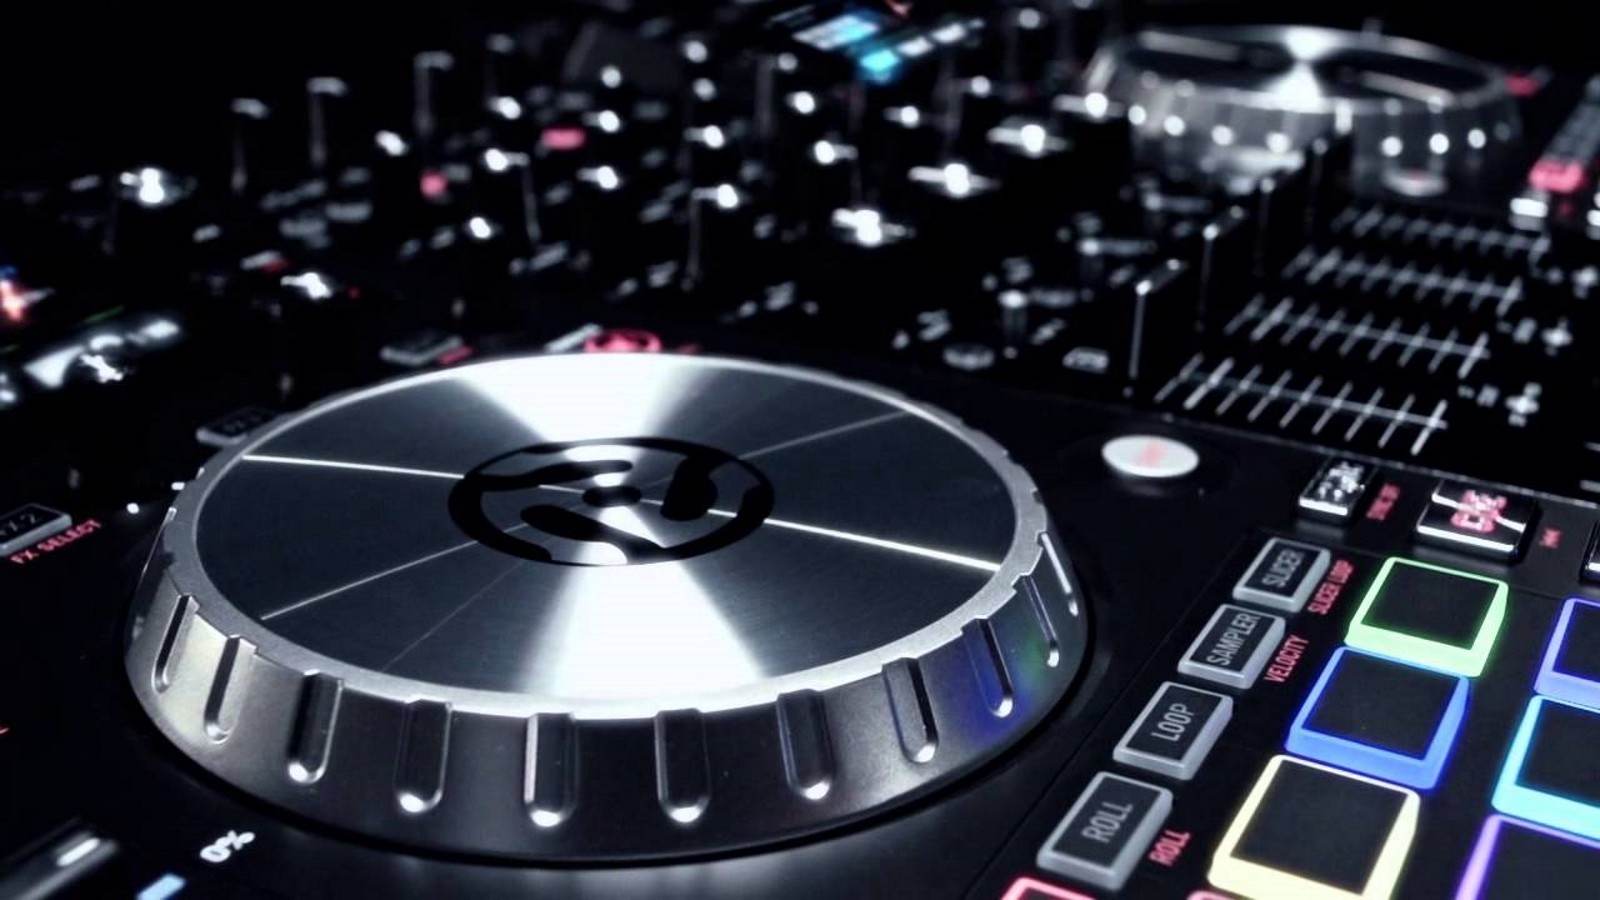 Numark NV DJ Serato Controller - DJ Gear